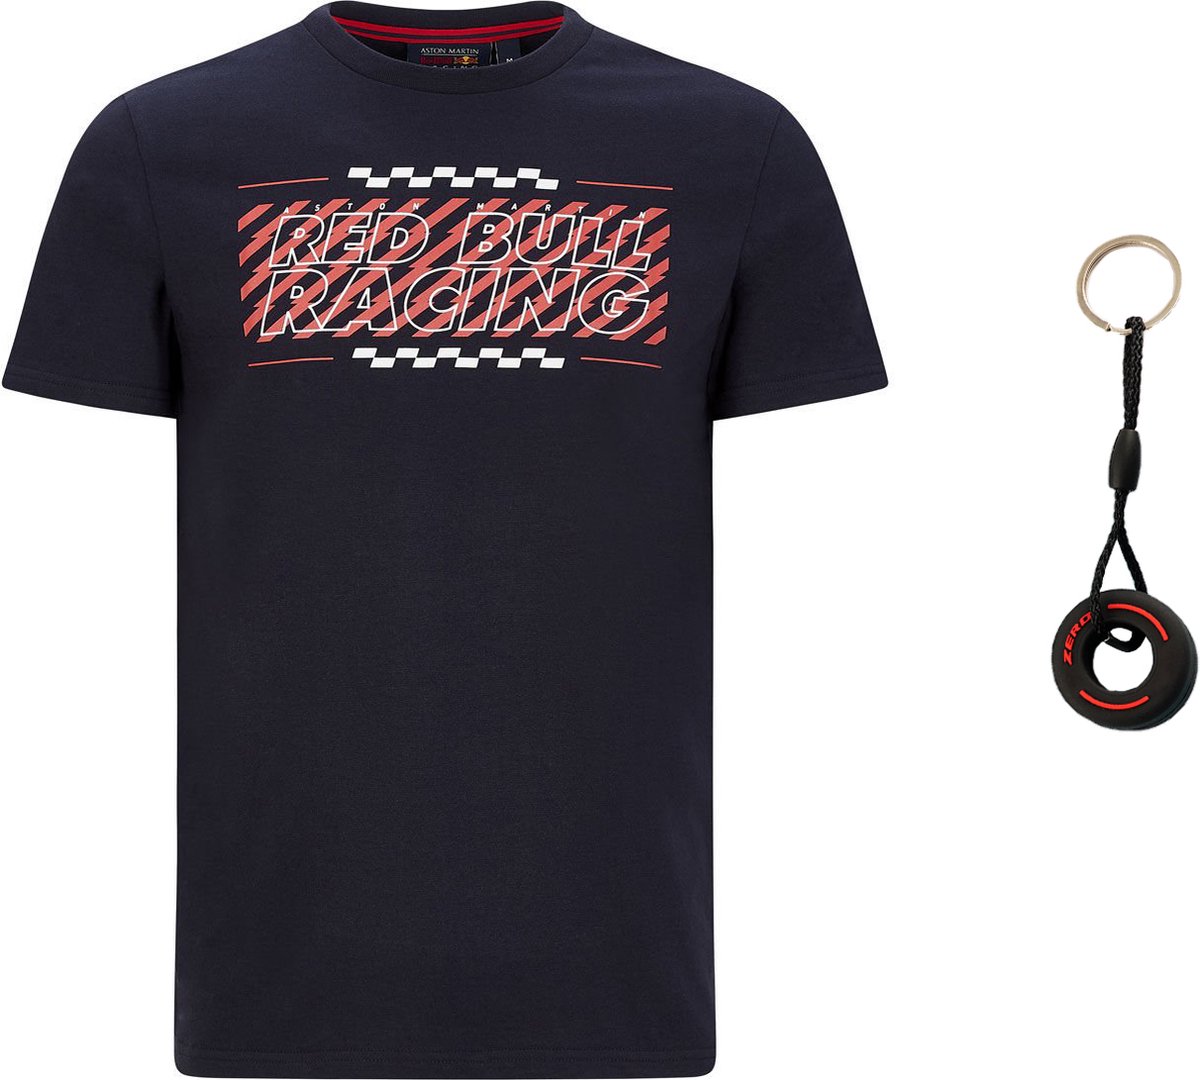 Red Bull Racing - Max Verstappen - Graphic T-Shirt - Maat S - inclusief F1 sleutelhanger - Formule 1